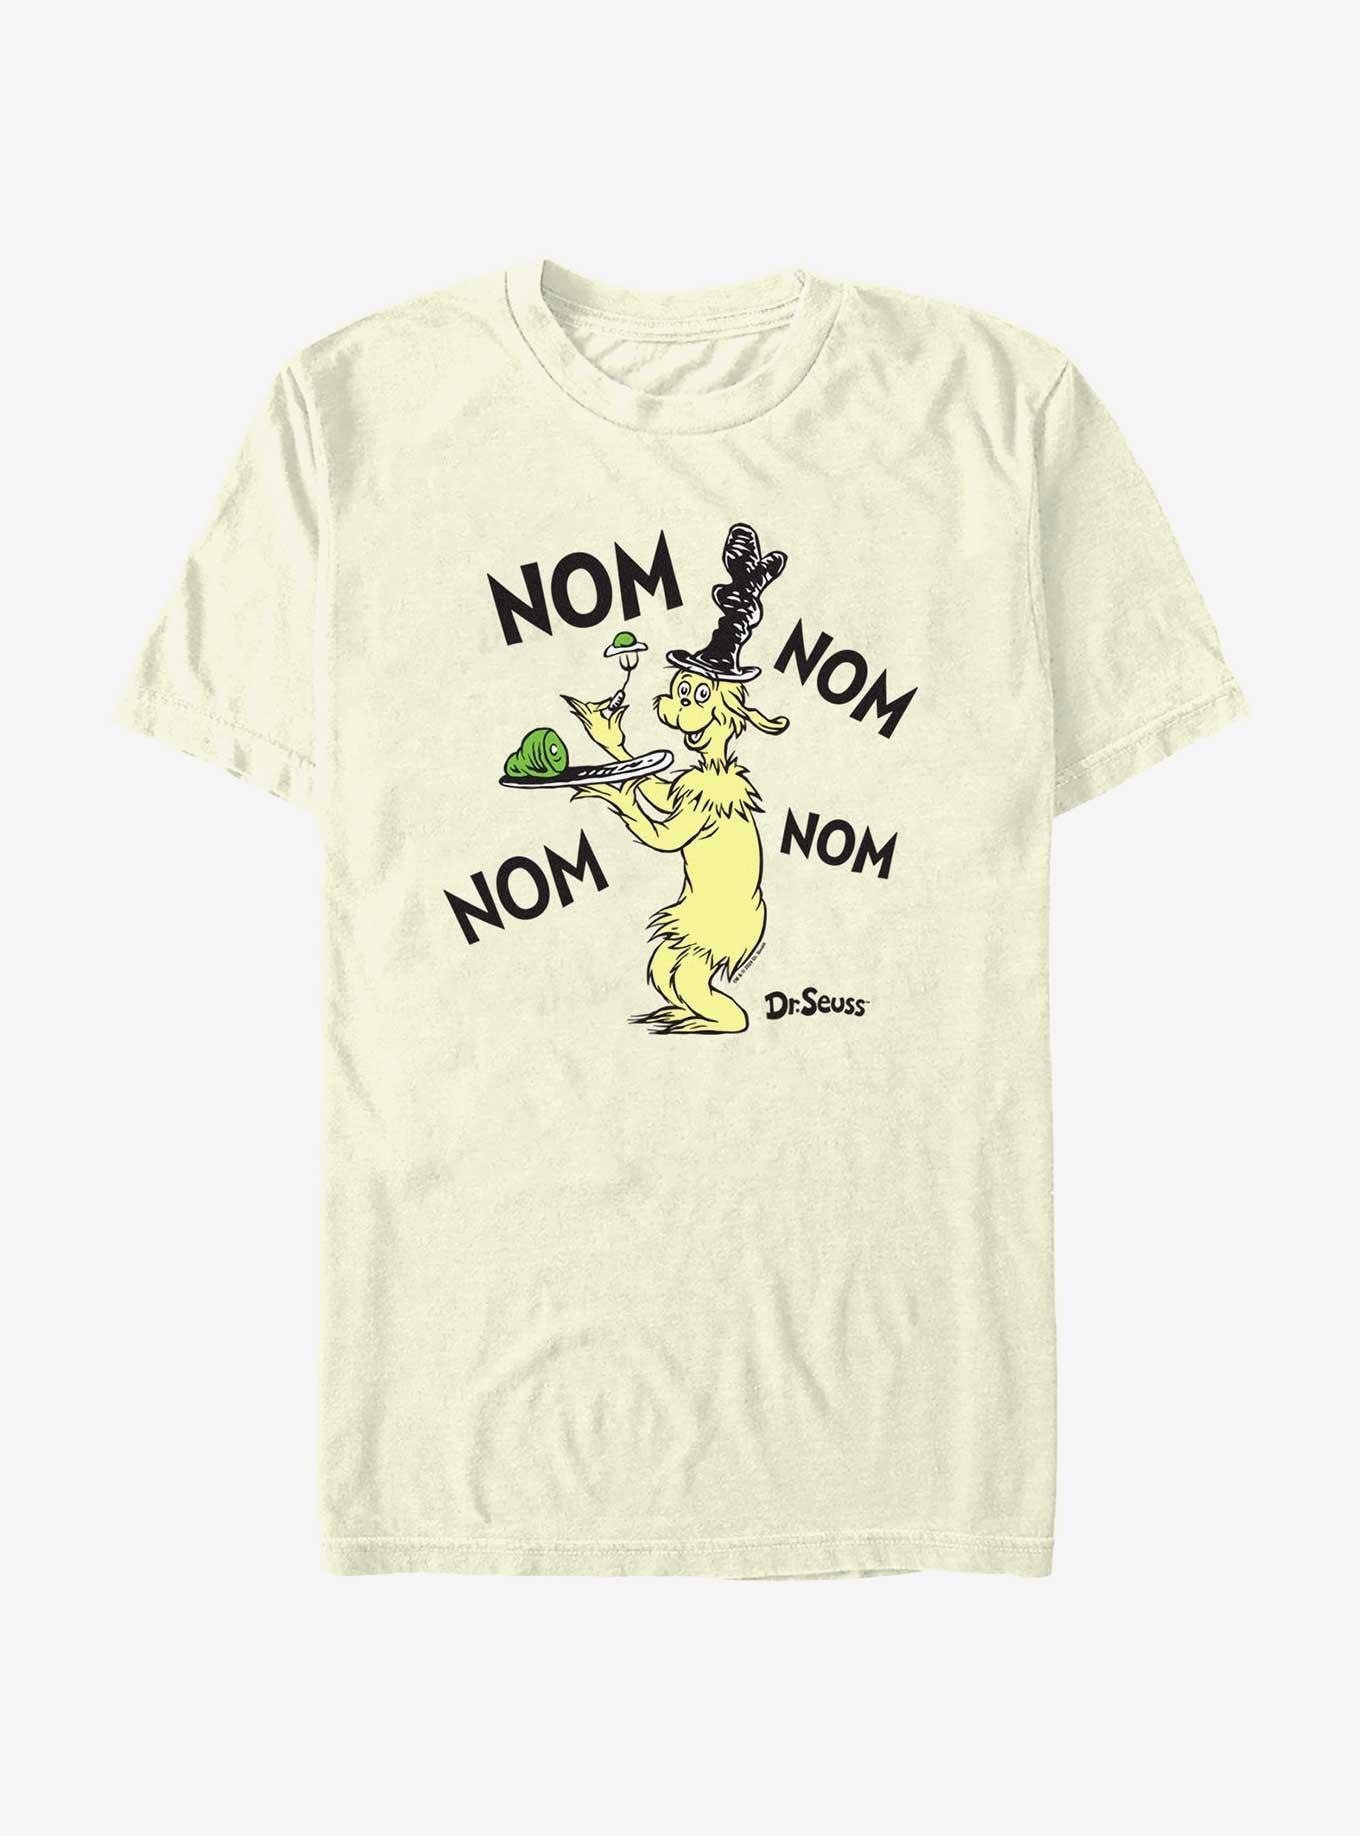 Dr. Seuss Nom Nom Nom Nom T-Shirt, NATURAL, hi-res